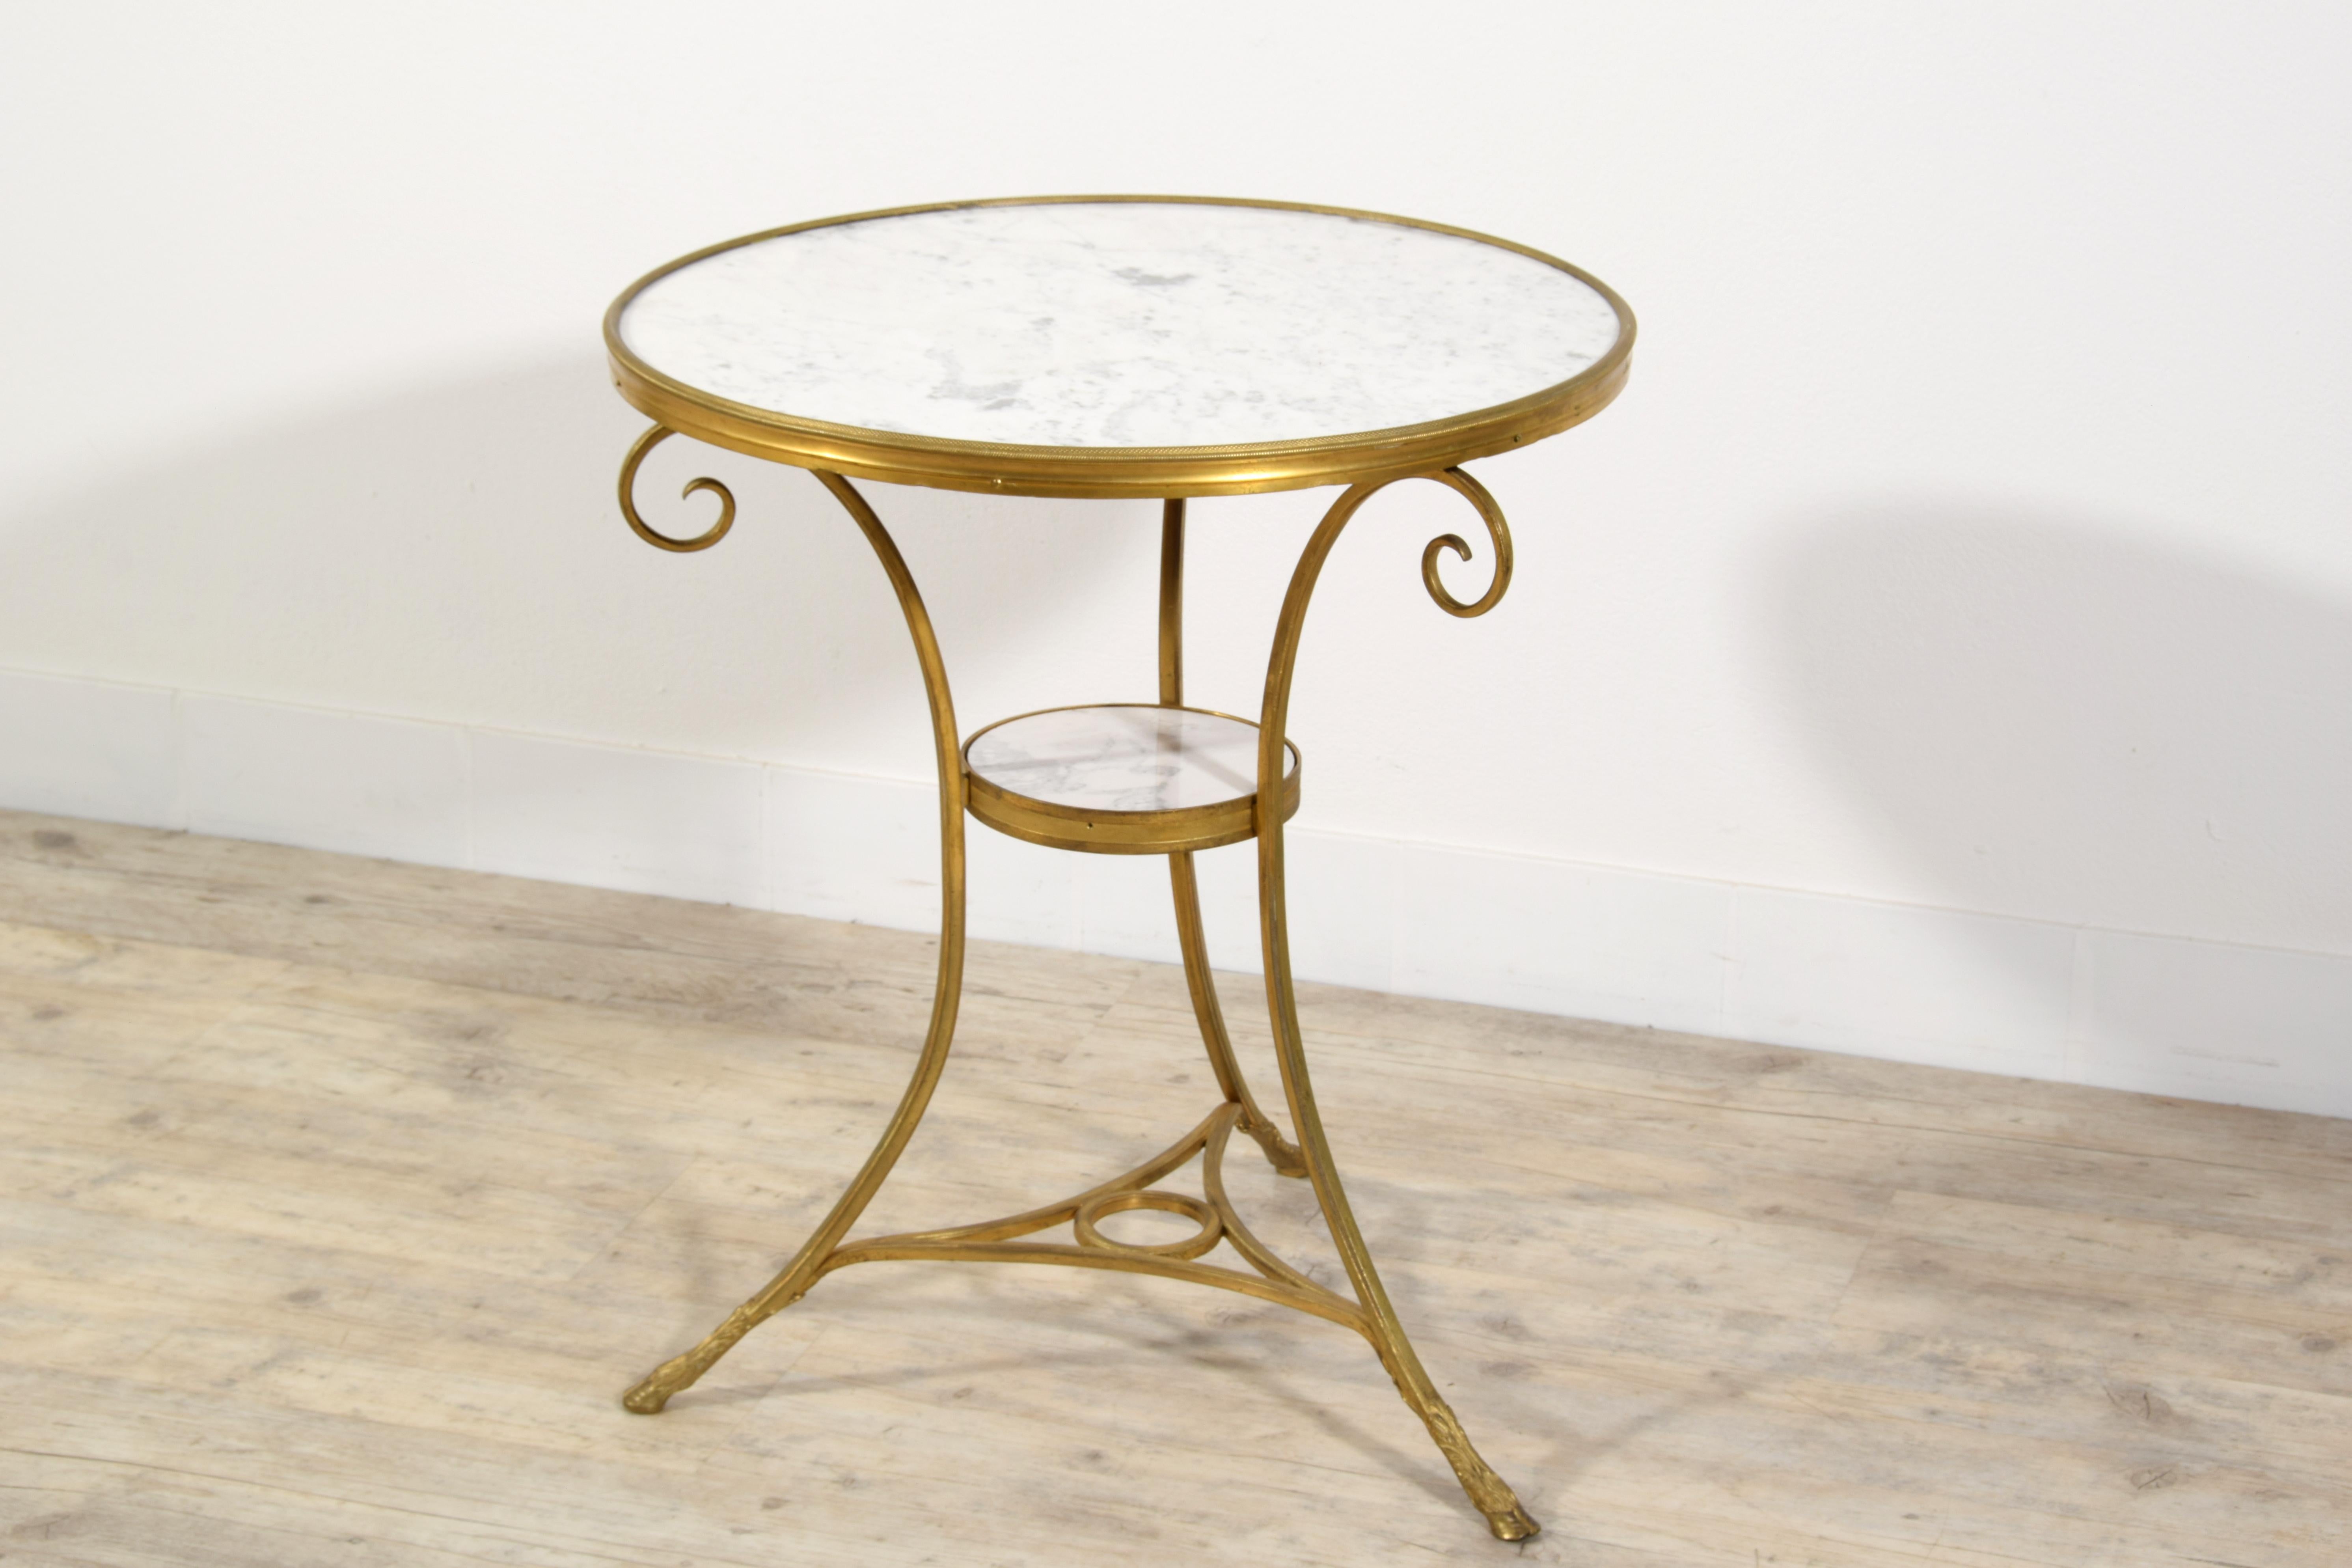 19th Century, Louis XVI Style French Gilt Bronze Tripod Coffee Table or Guéridon For Sale 2